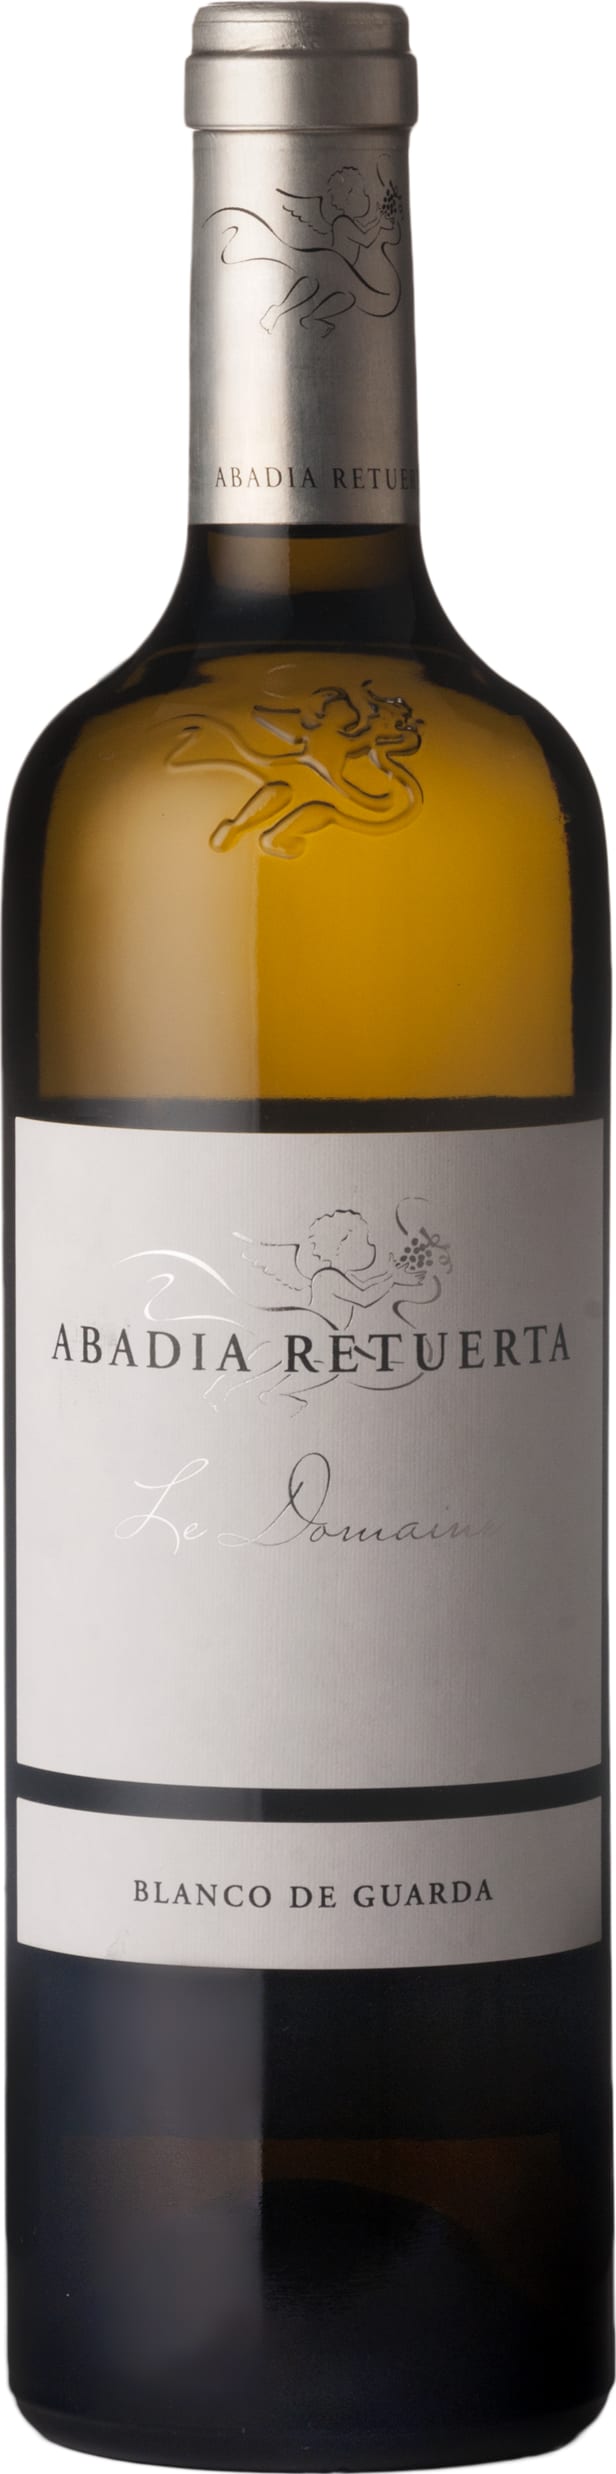 Abadia Retuerta Le Domaine White 2020 75cl - Buy Abadia Retuerta Wines from GREAT WINES DIRECT wine shop